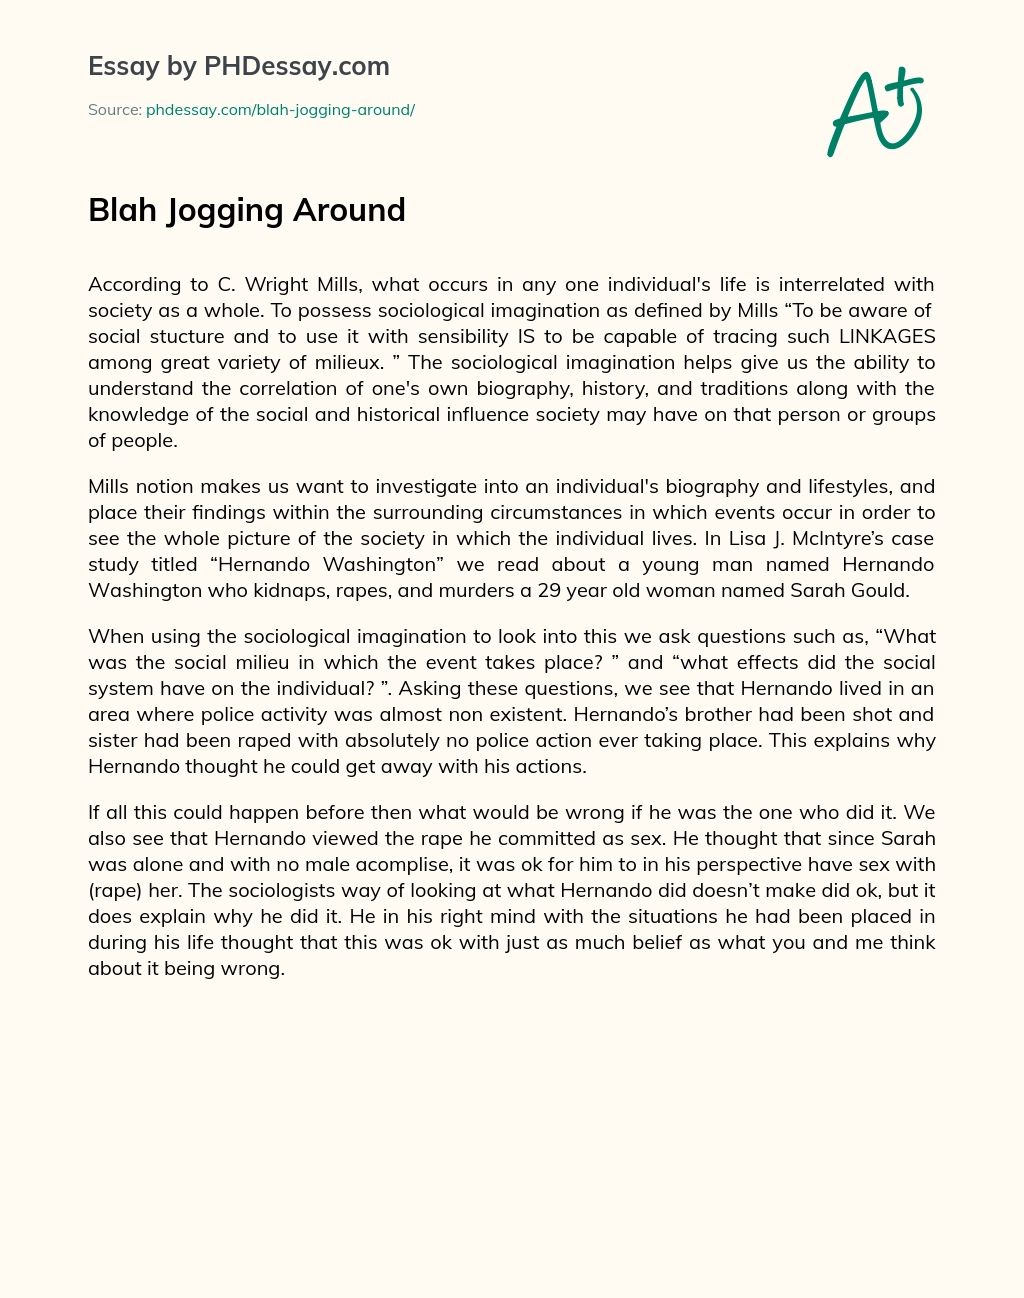 Blah Jogging Around essay